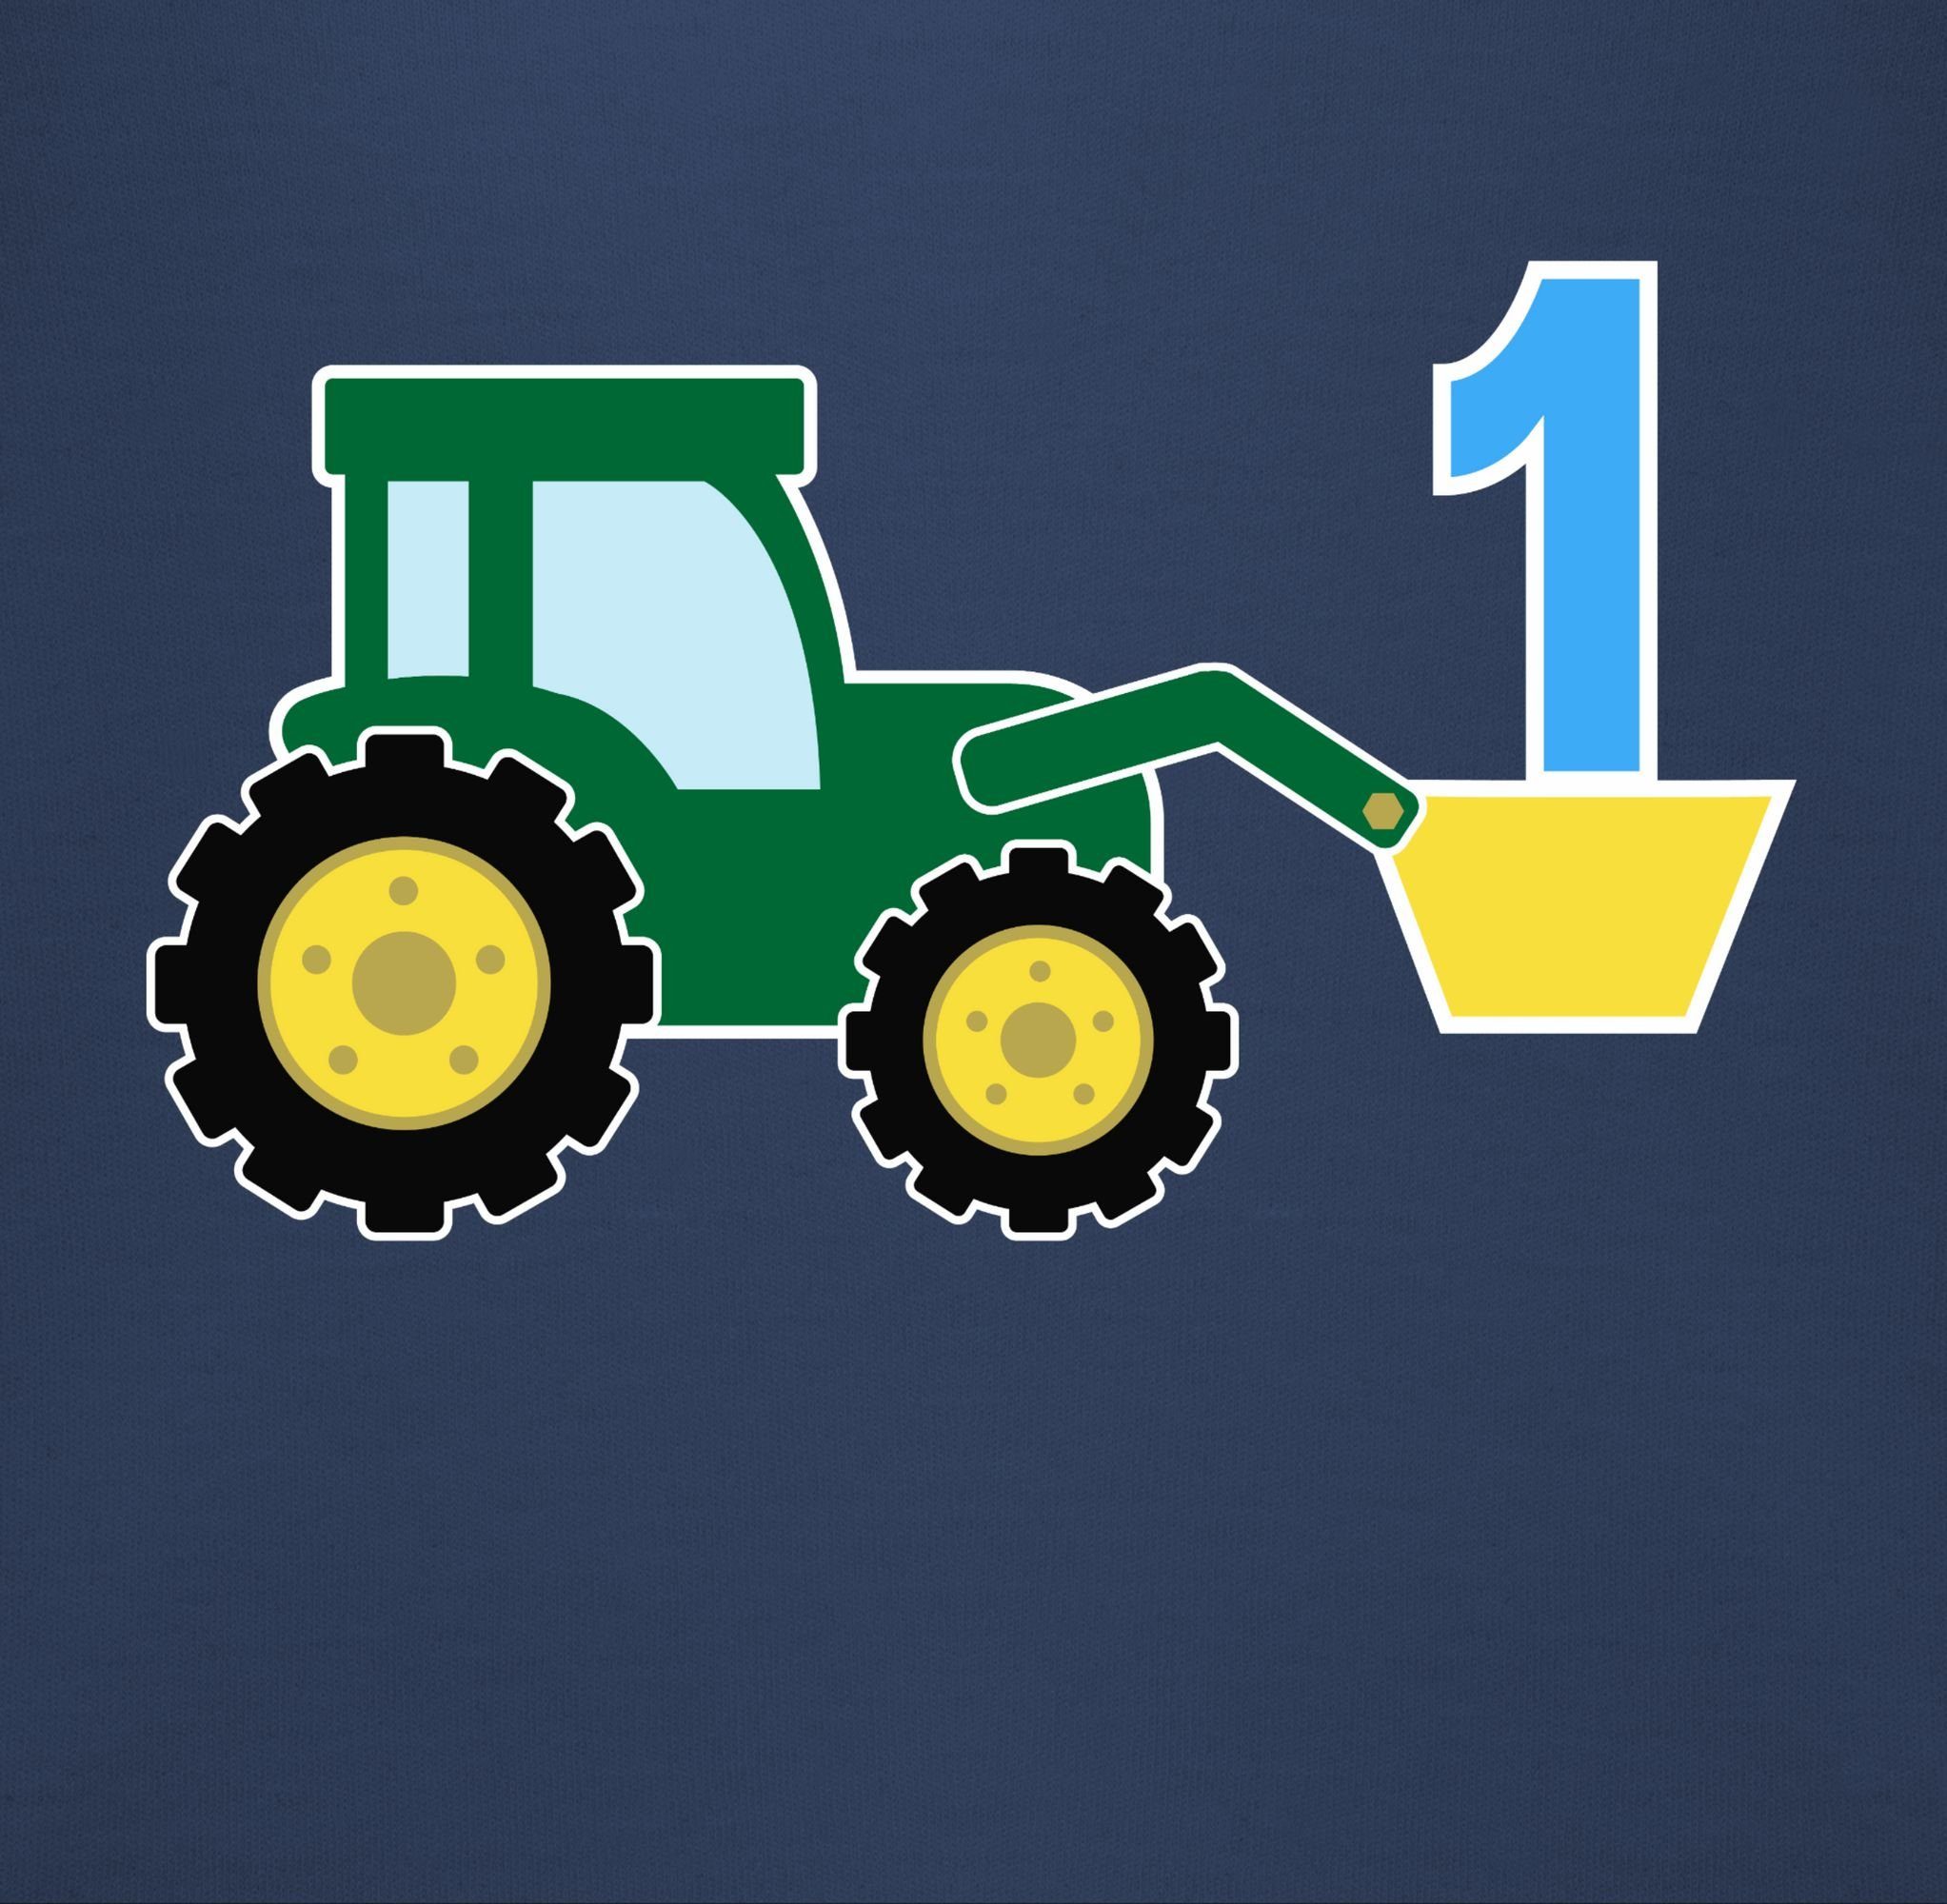 Ernster 1. Blau 1 Sweatshirt Traktor Geburtstag Shirtracer Navy